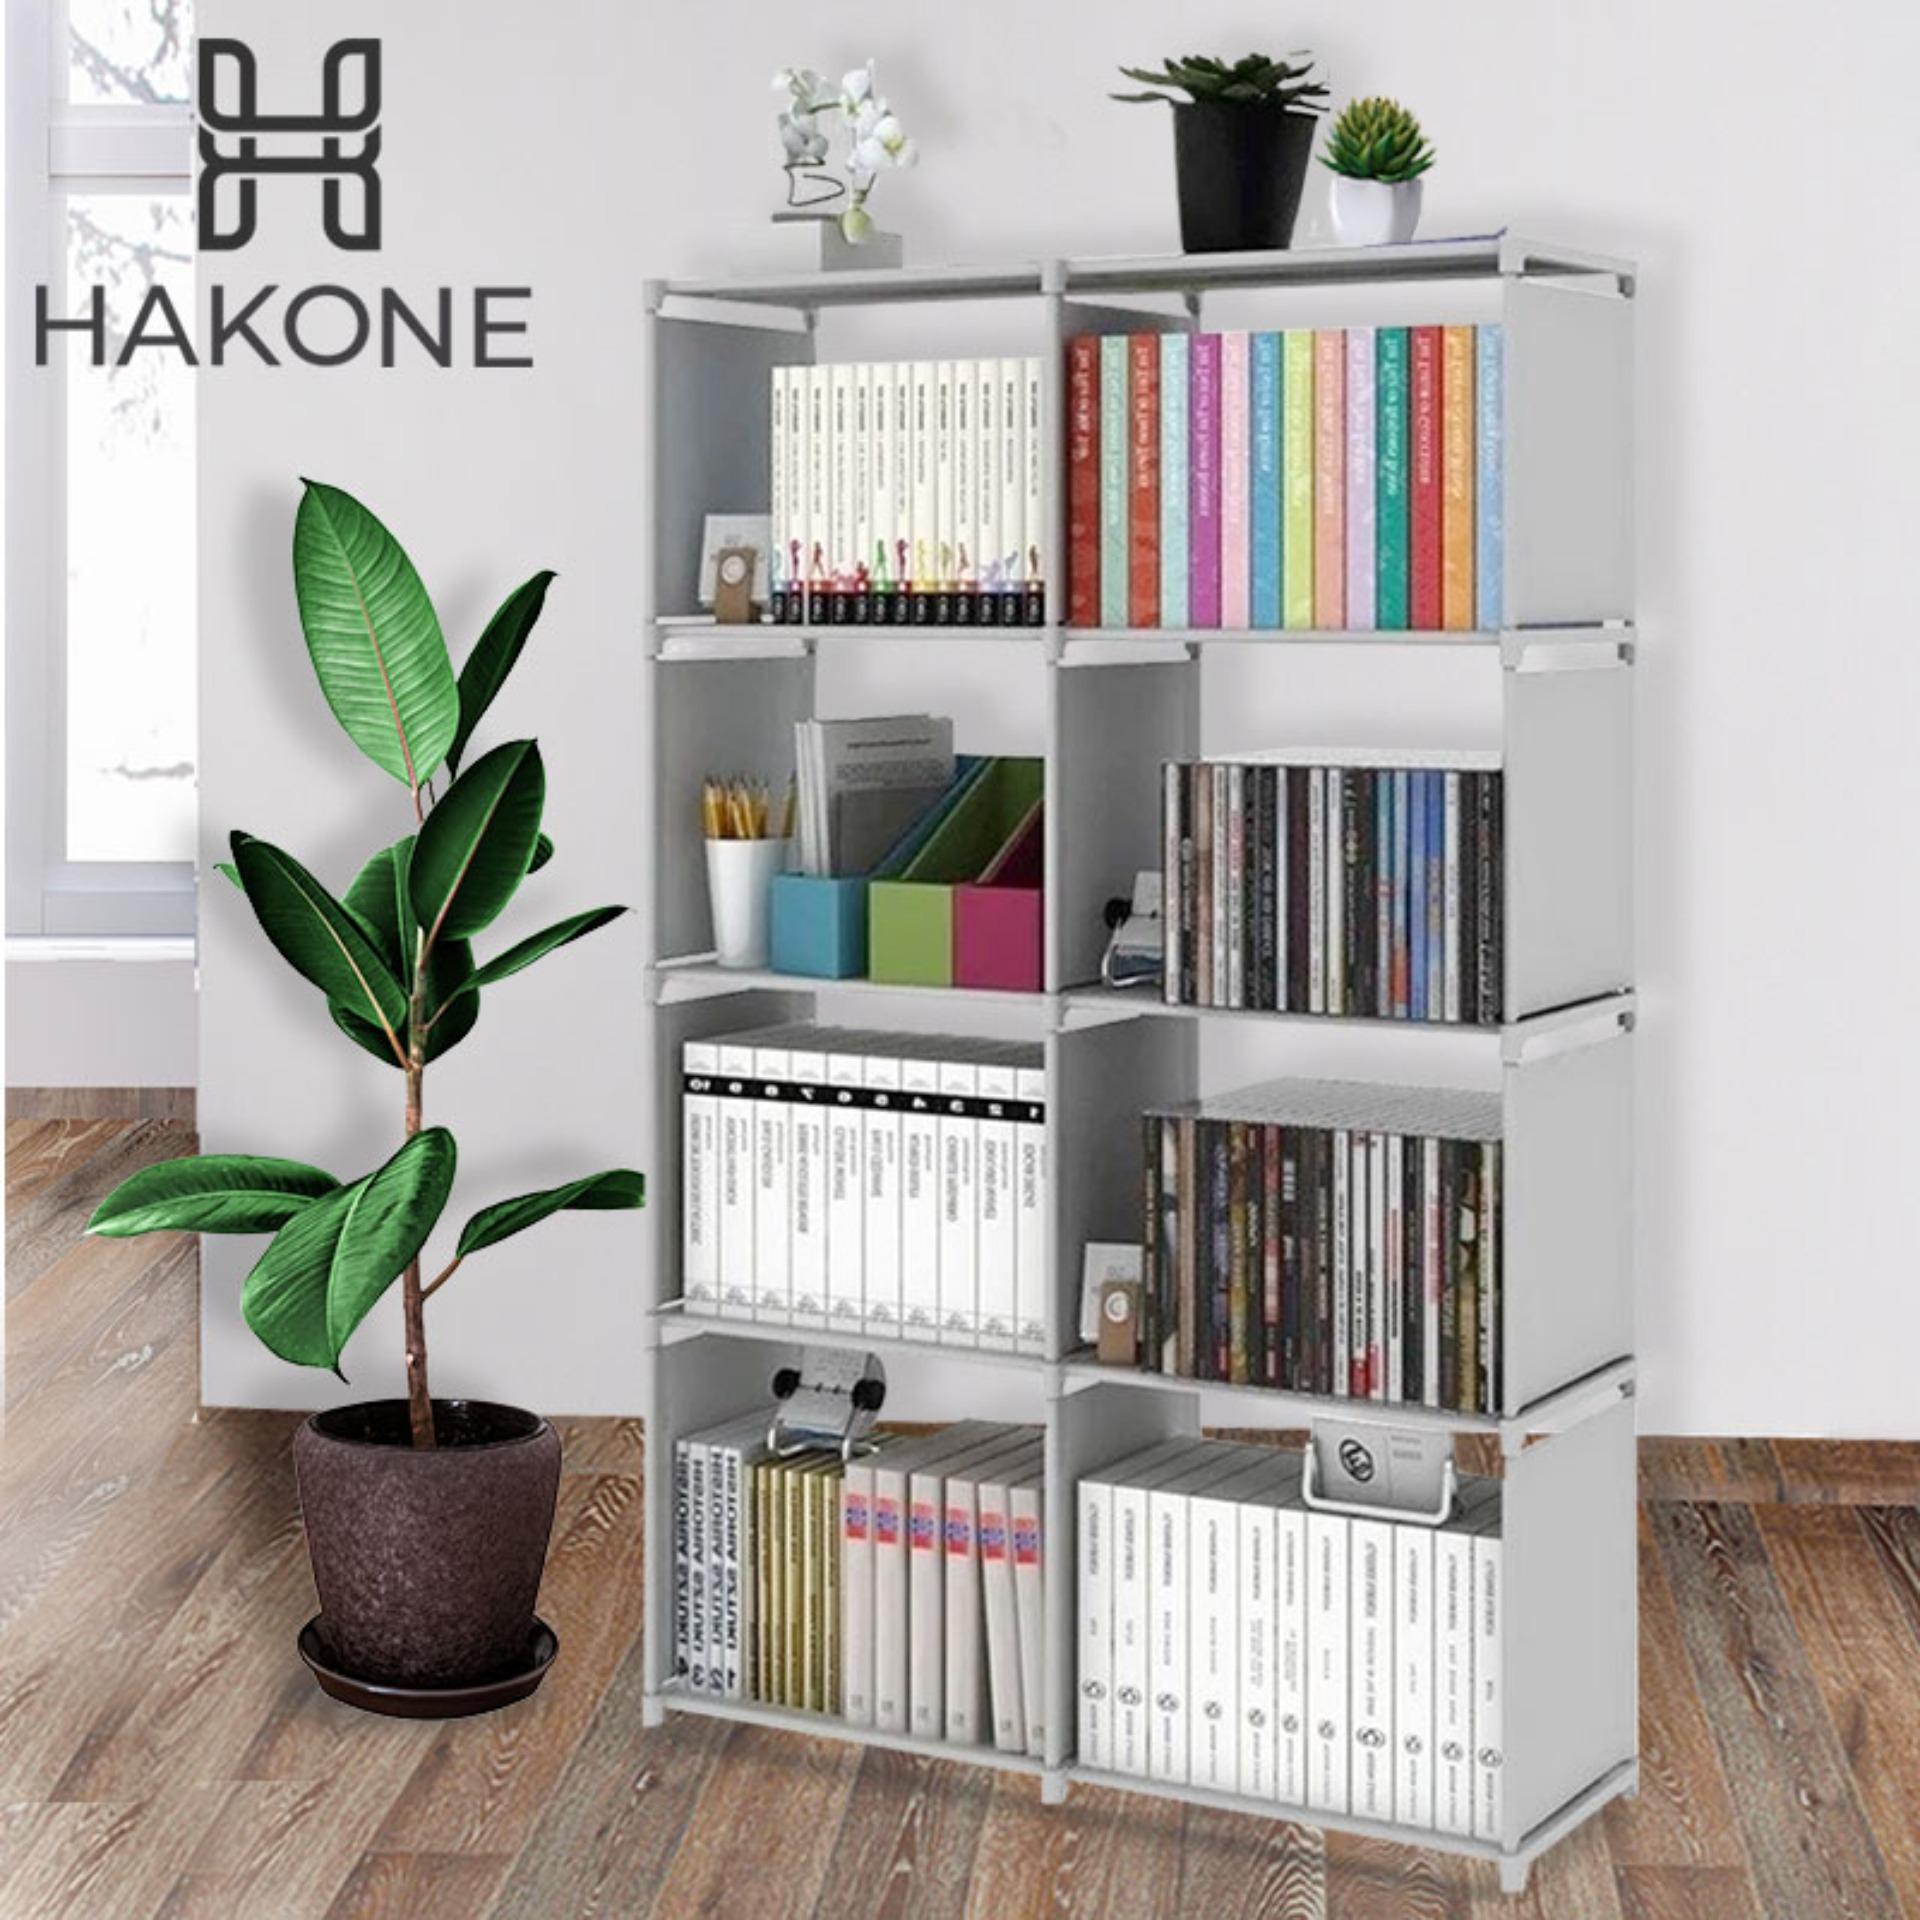 Homehuk Hakone Bookshelf Bookshelves Bookcases Diy Book Storage